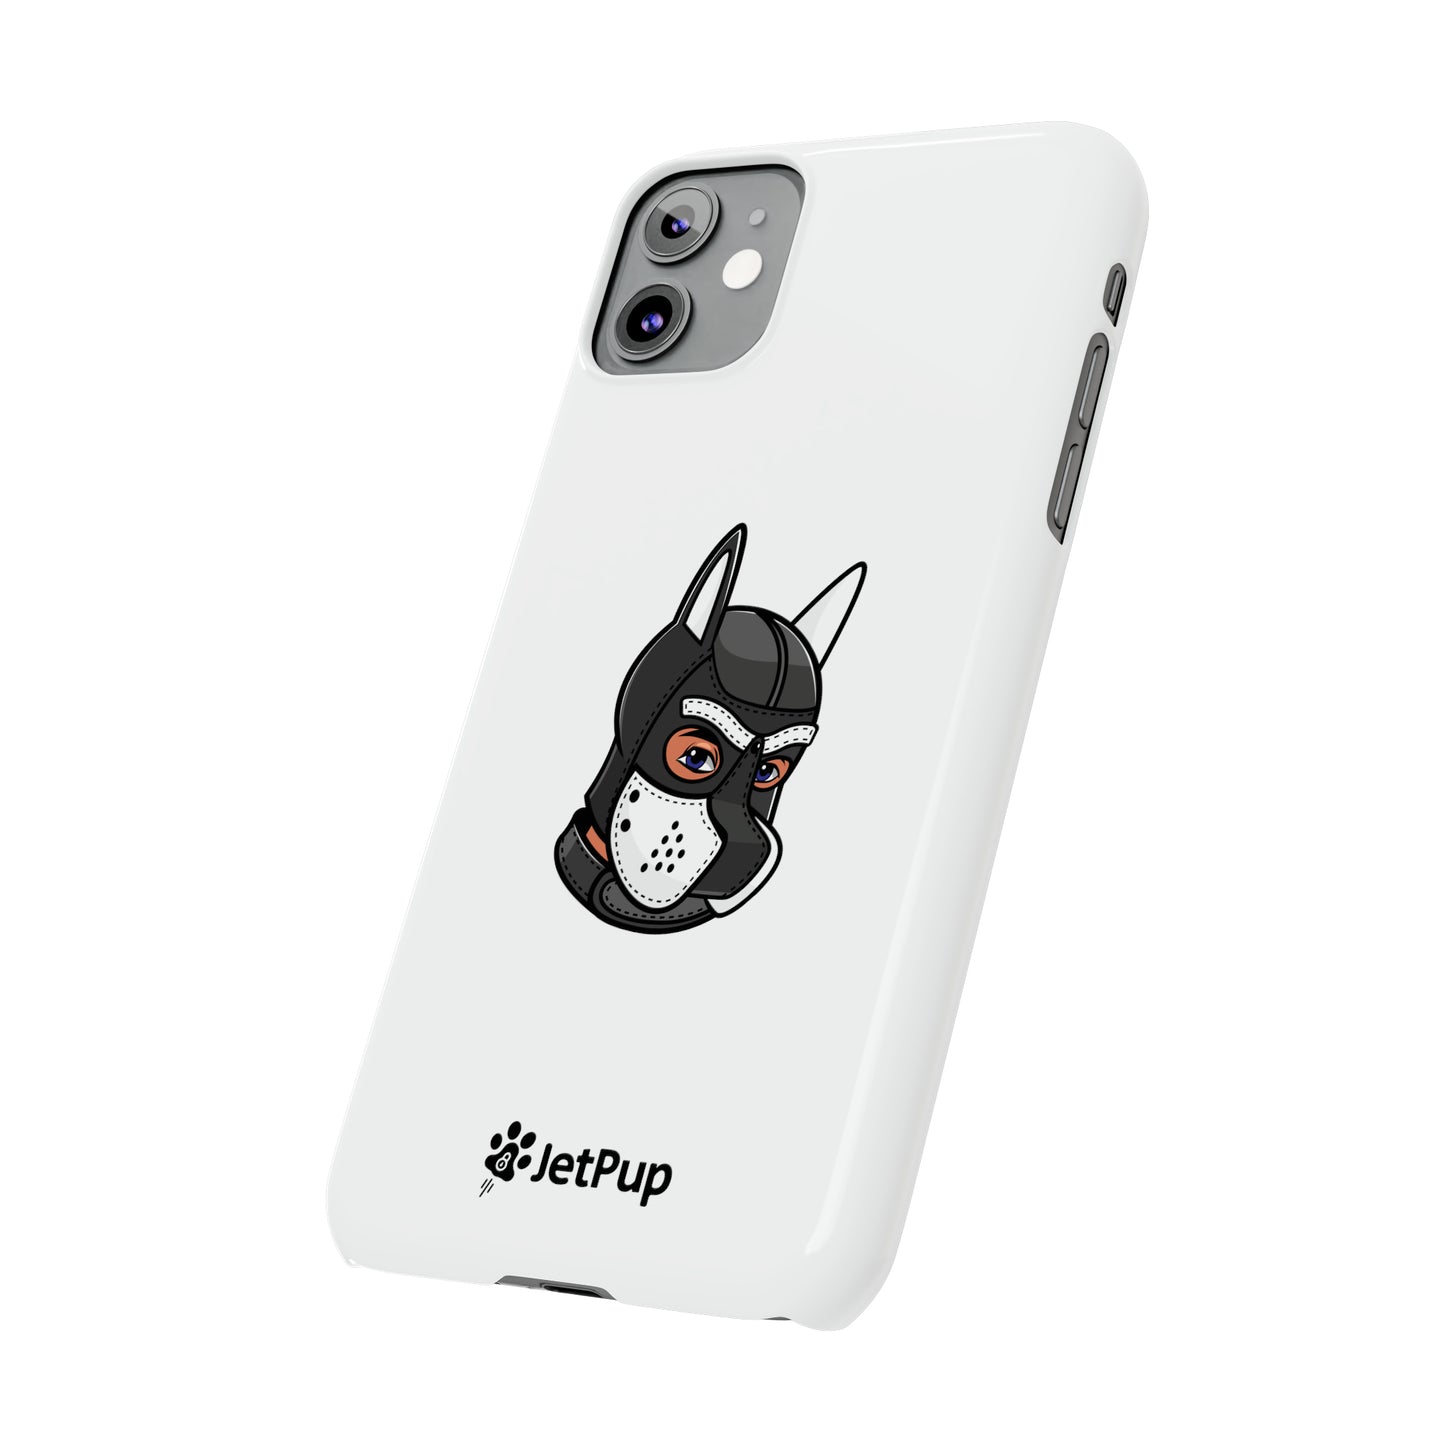 Pup Hood Slim iPhone Cases - White